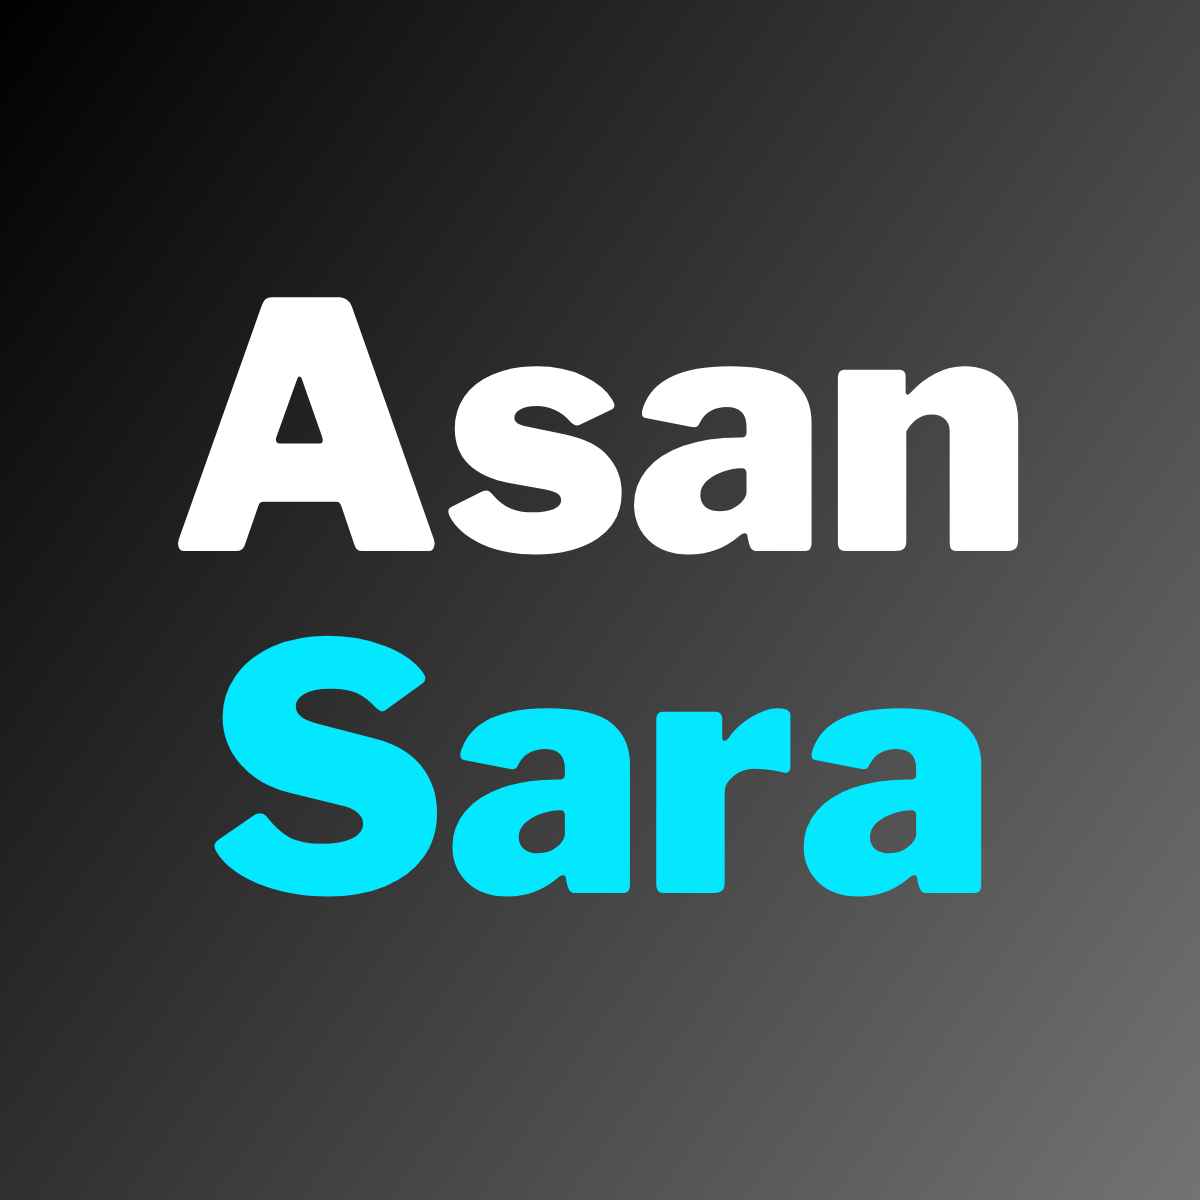 asan sara download, asan sara 2023, asan sara apk download, Asan sara app download, Asan sara app for android, Asan sara app download apk, Asan sara app download latest version,